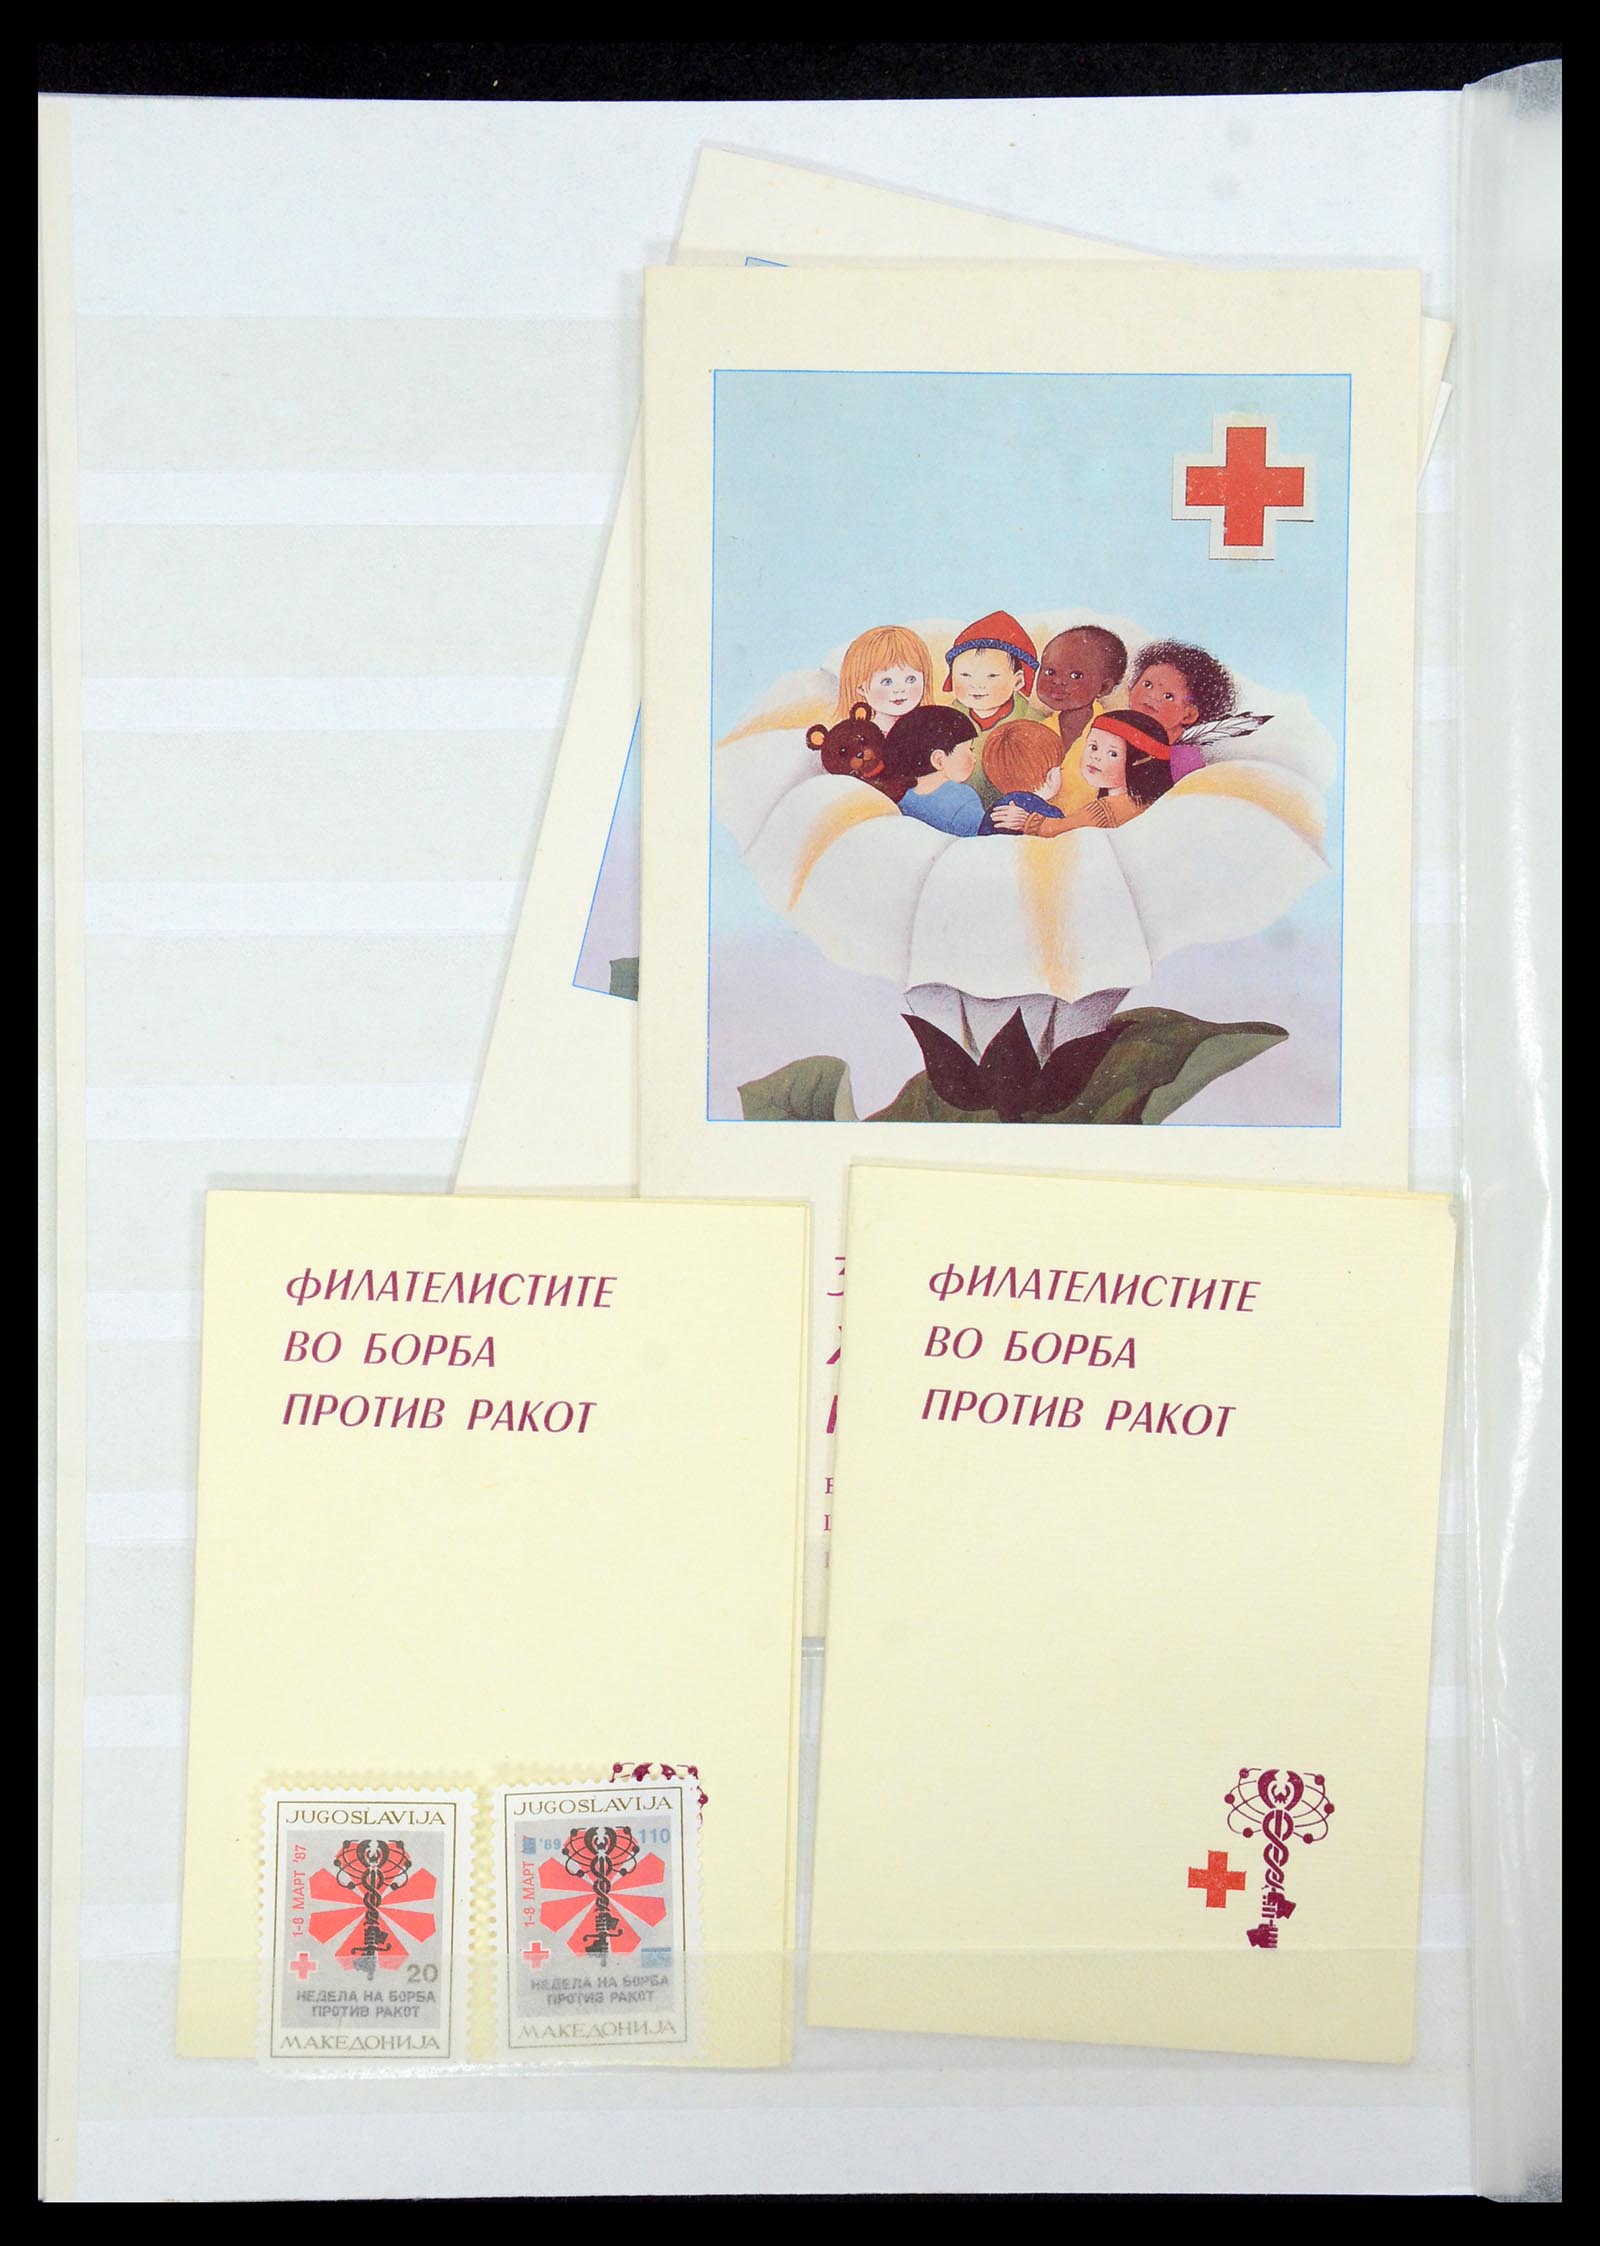 36107 308 - Stamp collection 36107 Yugoslavia 1918-2003.